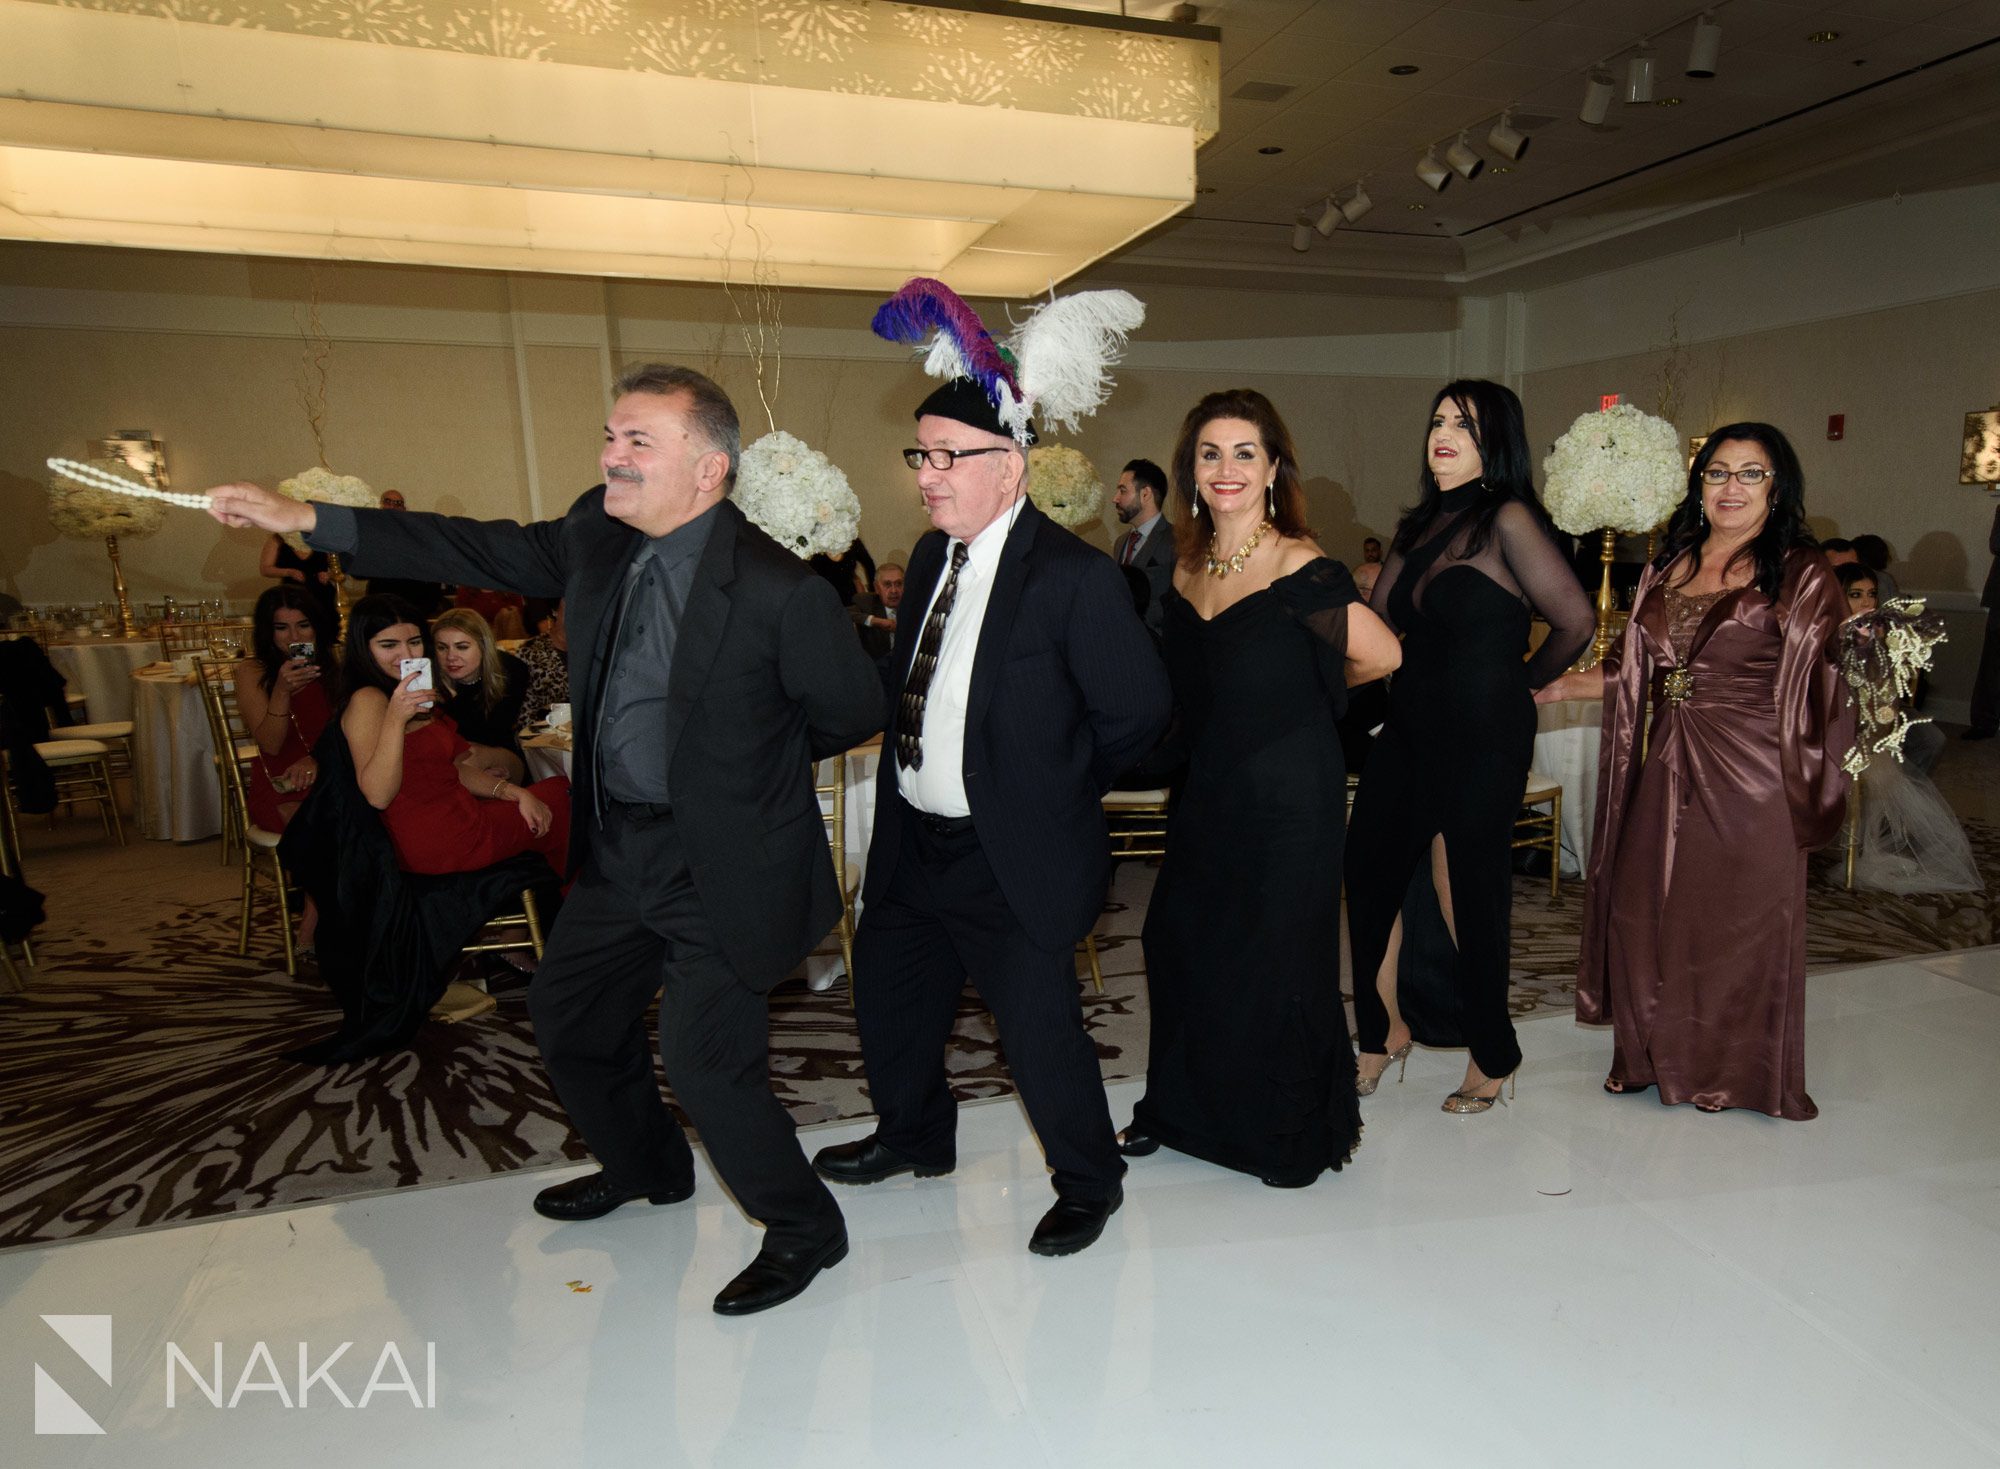 Assyrian wedding reception photos traditional dancing